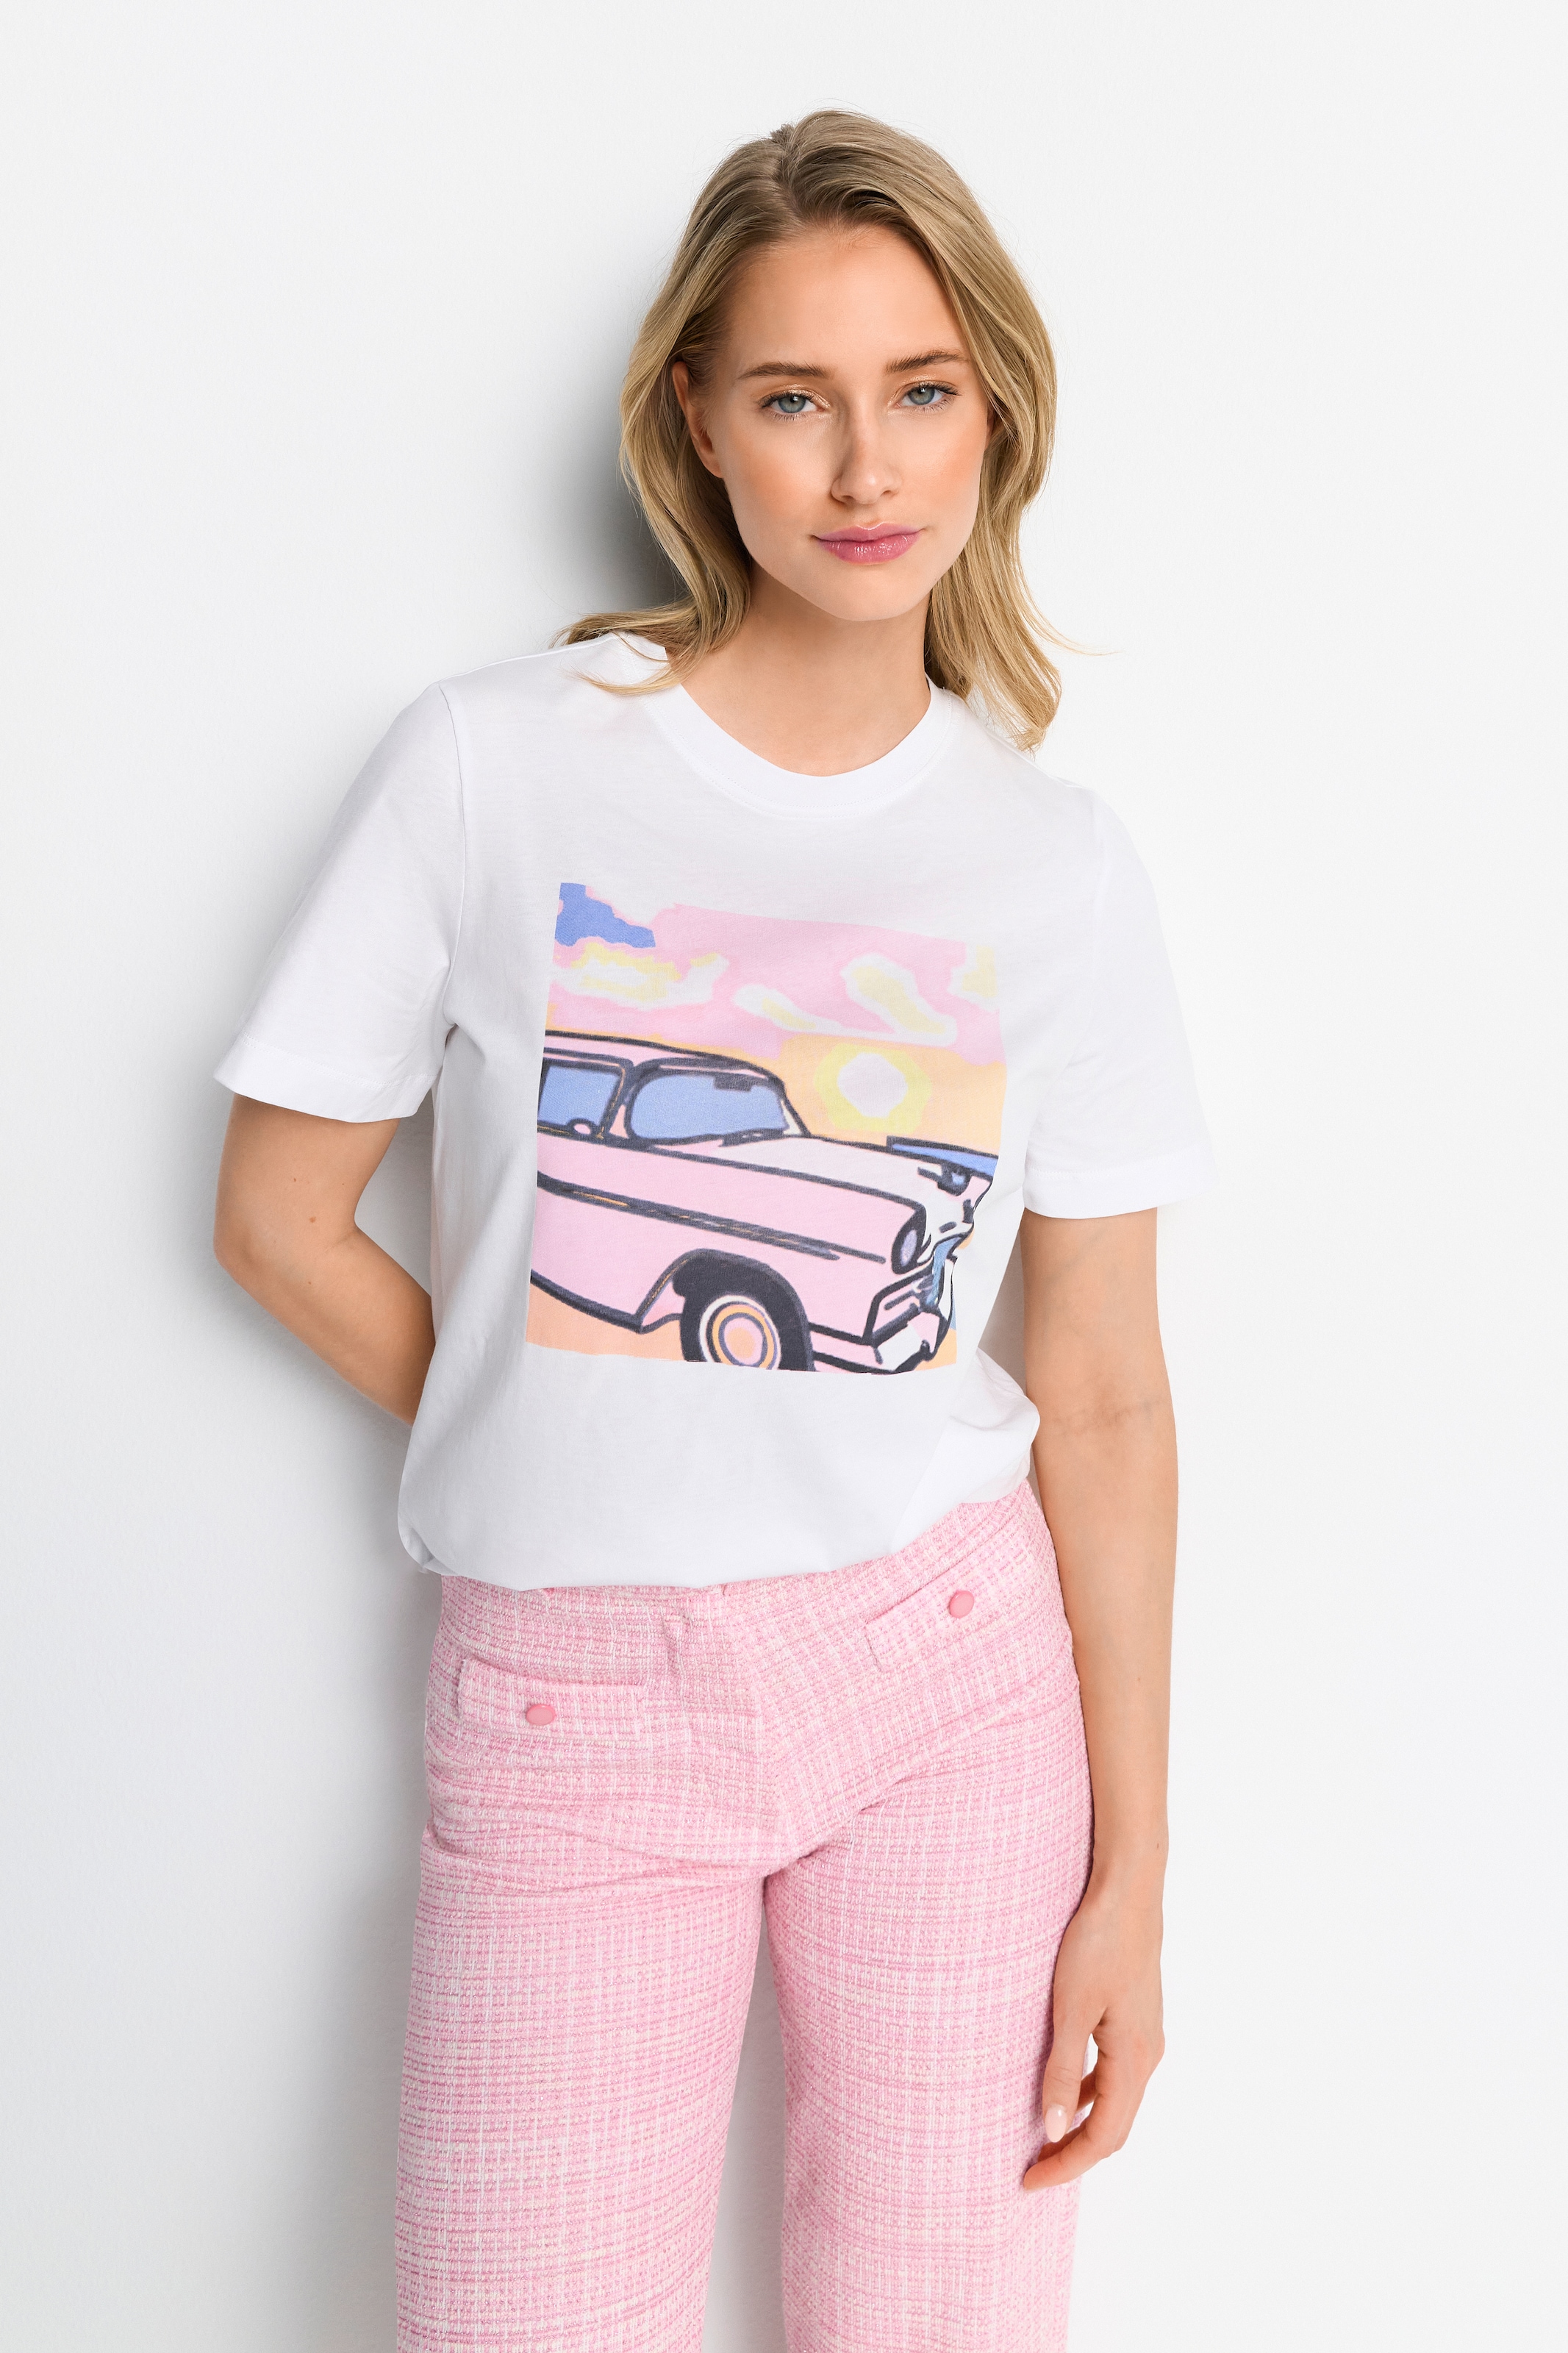 Rich & Royal Print-Shirt, barbie car print